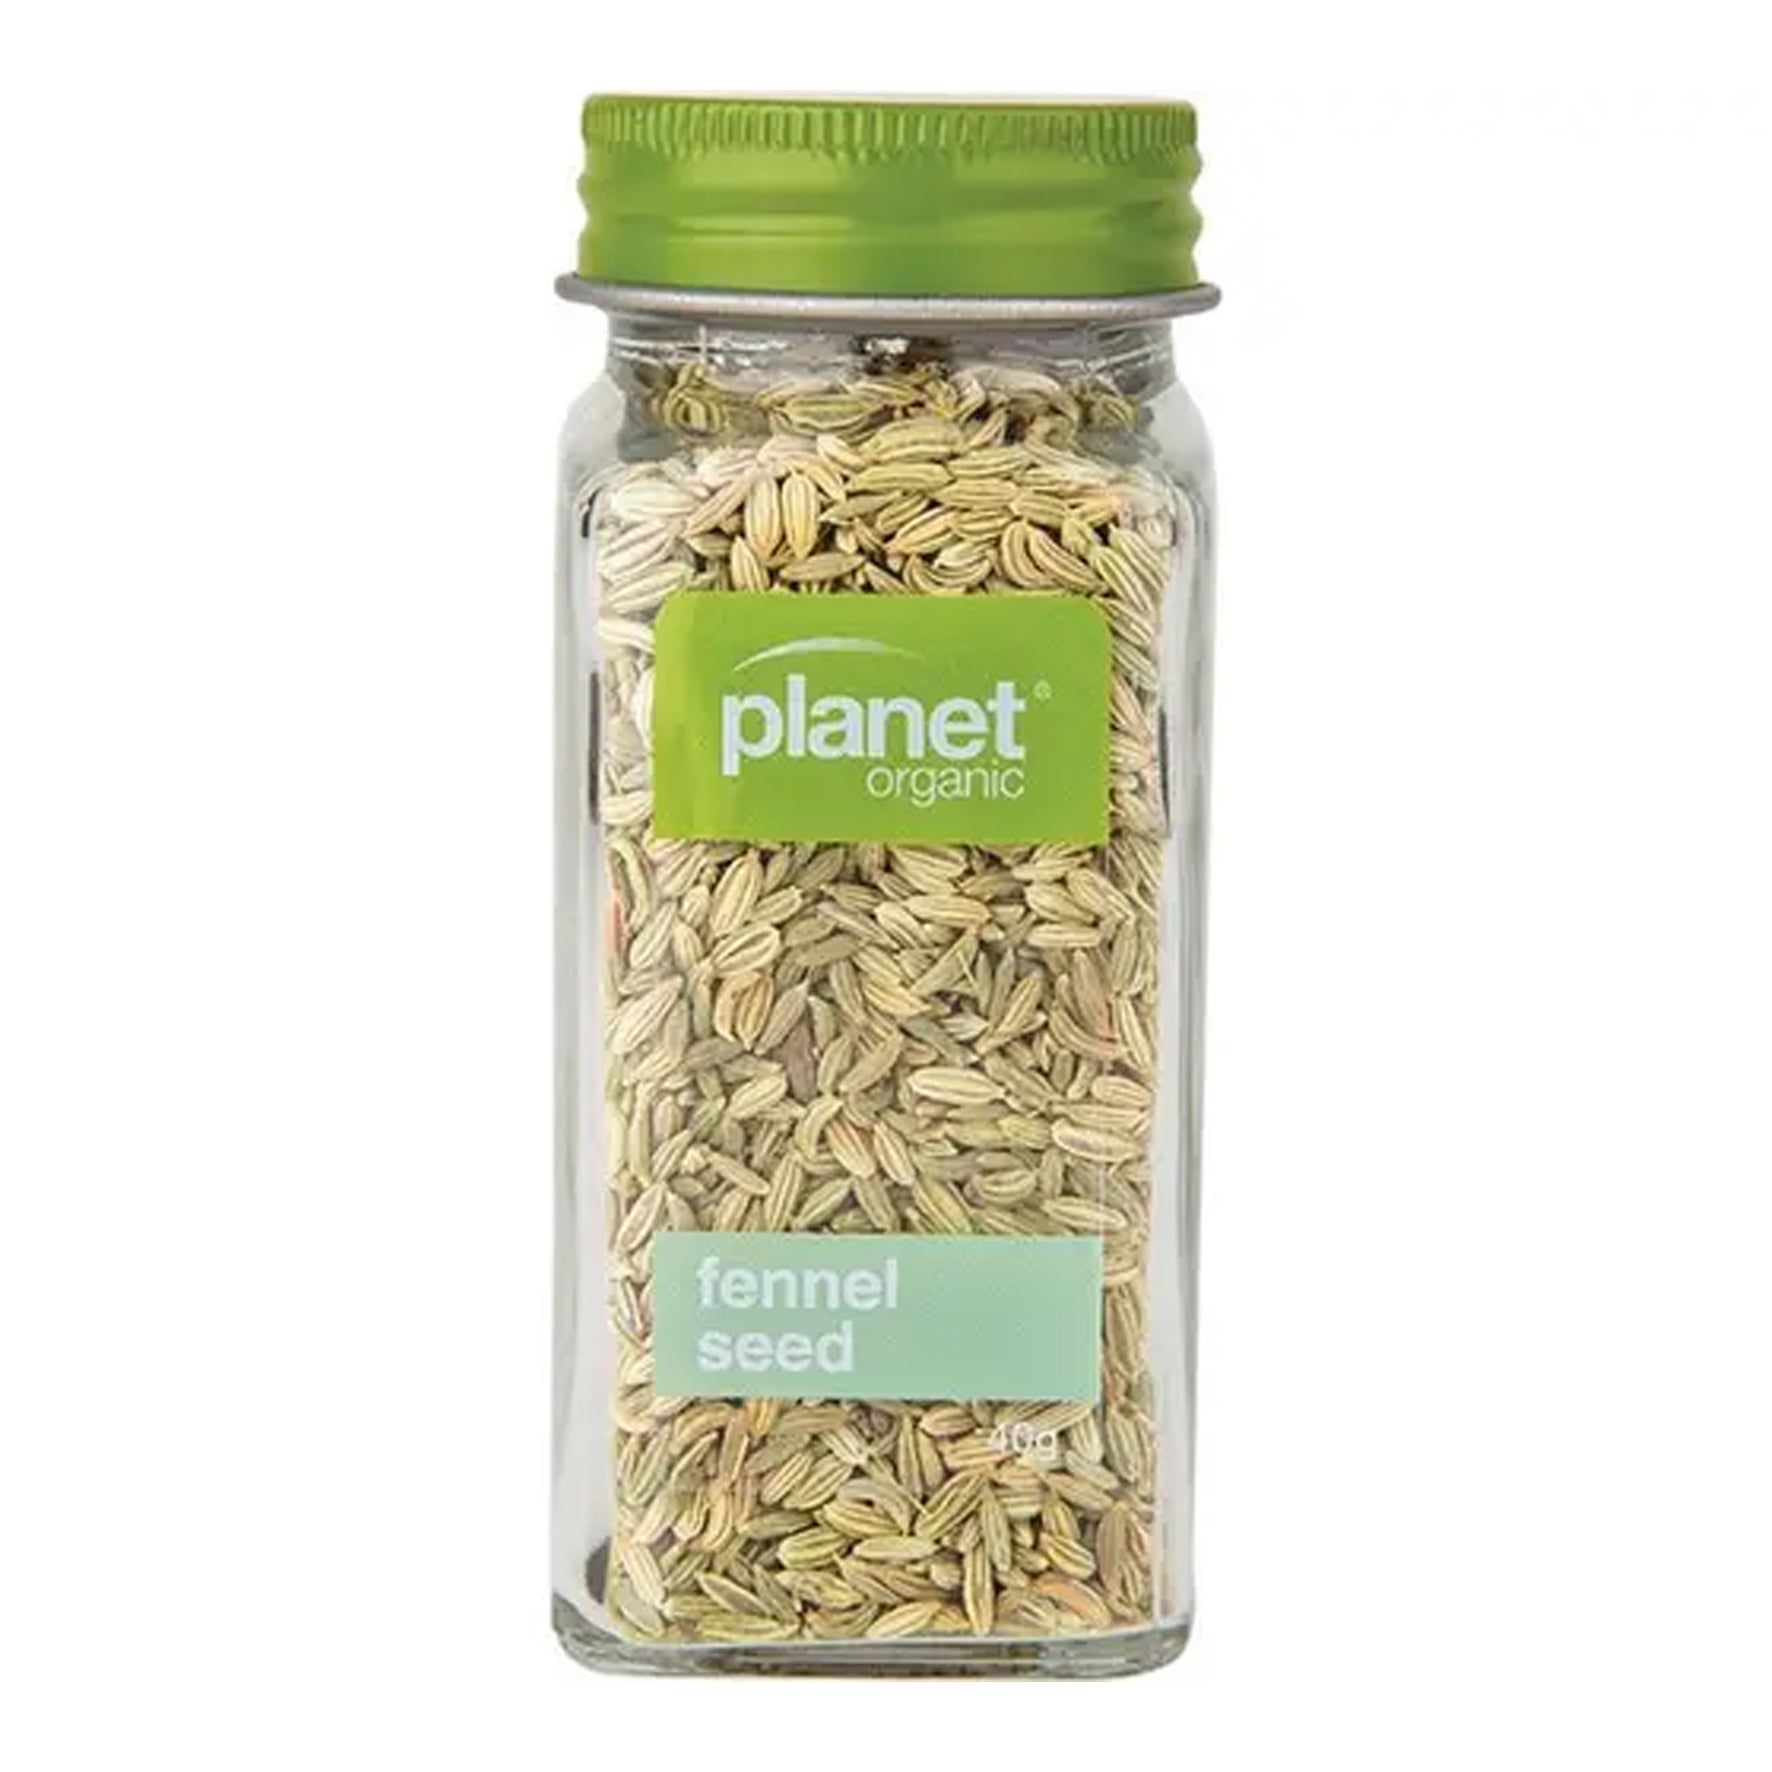 Planet Organic Herbs - Fennel Seed 40g